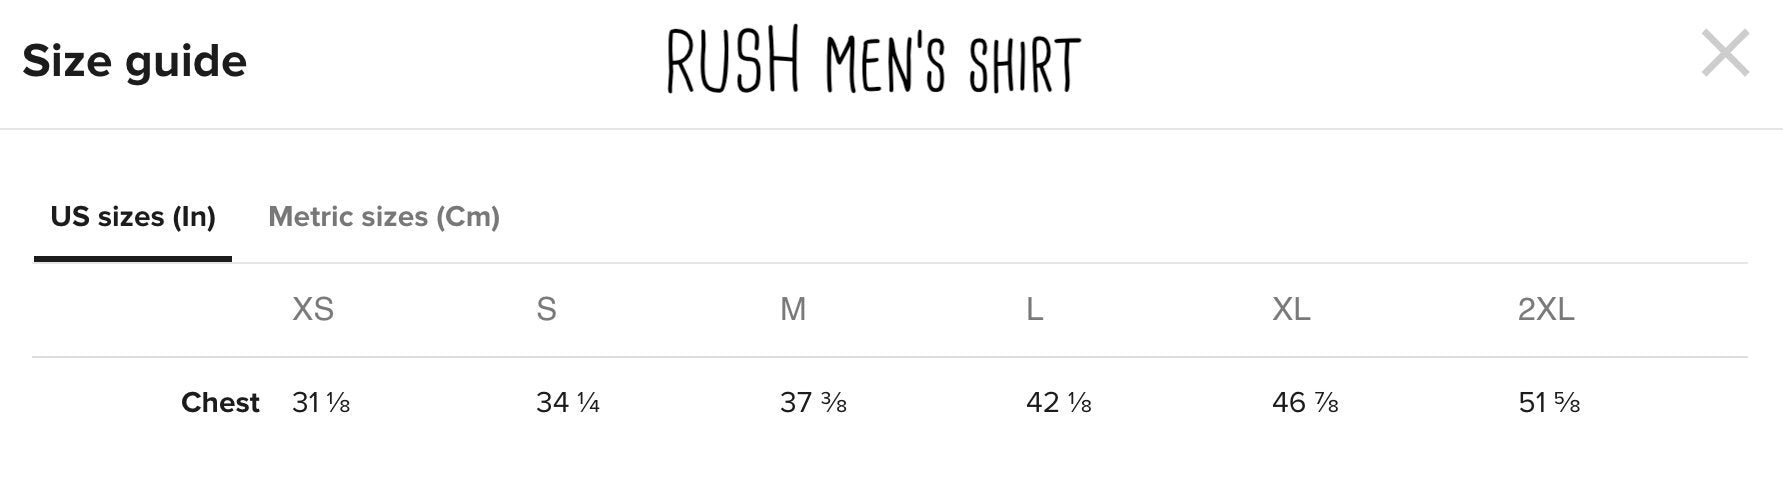 Men&#39;s Sulley Monsters Inc Inspired Shirt